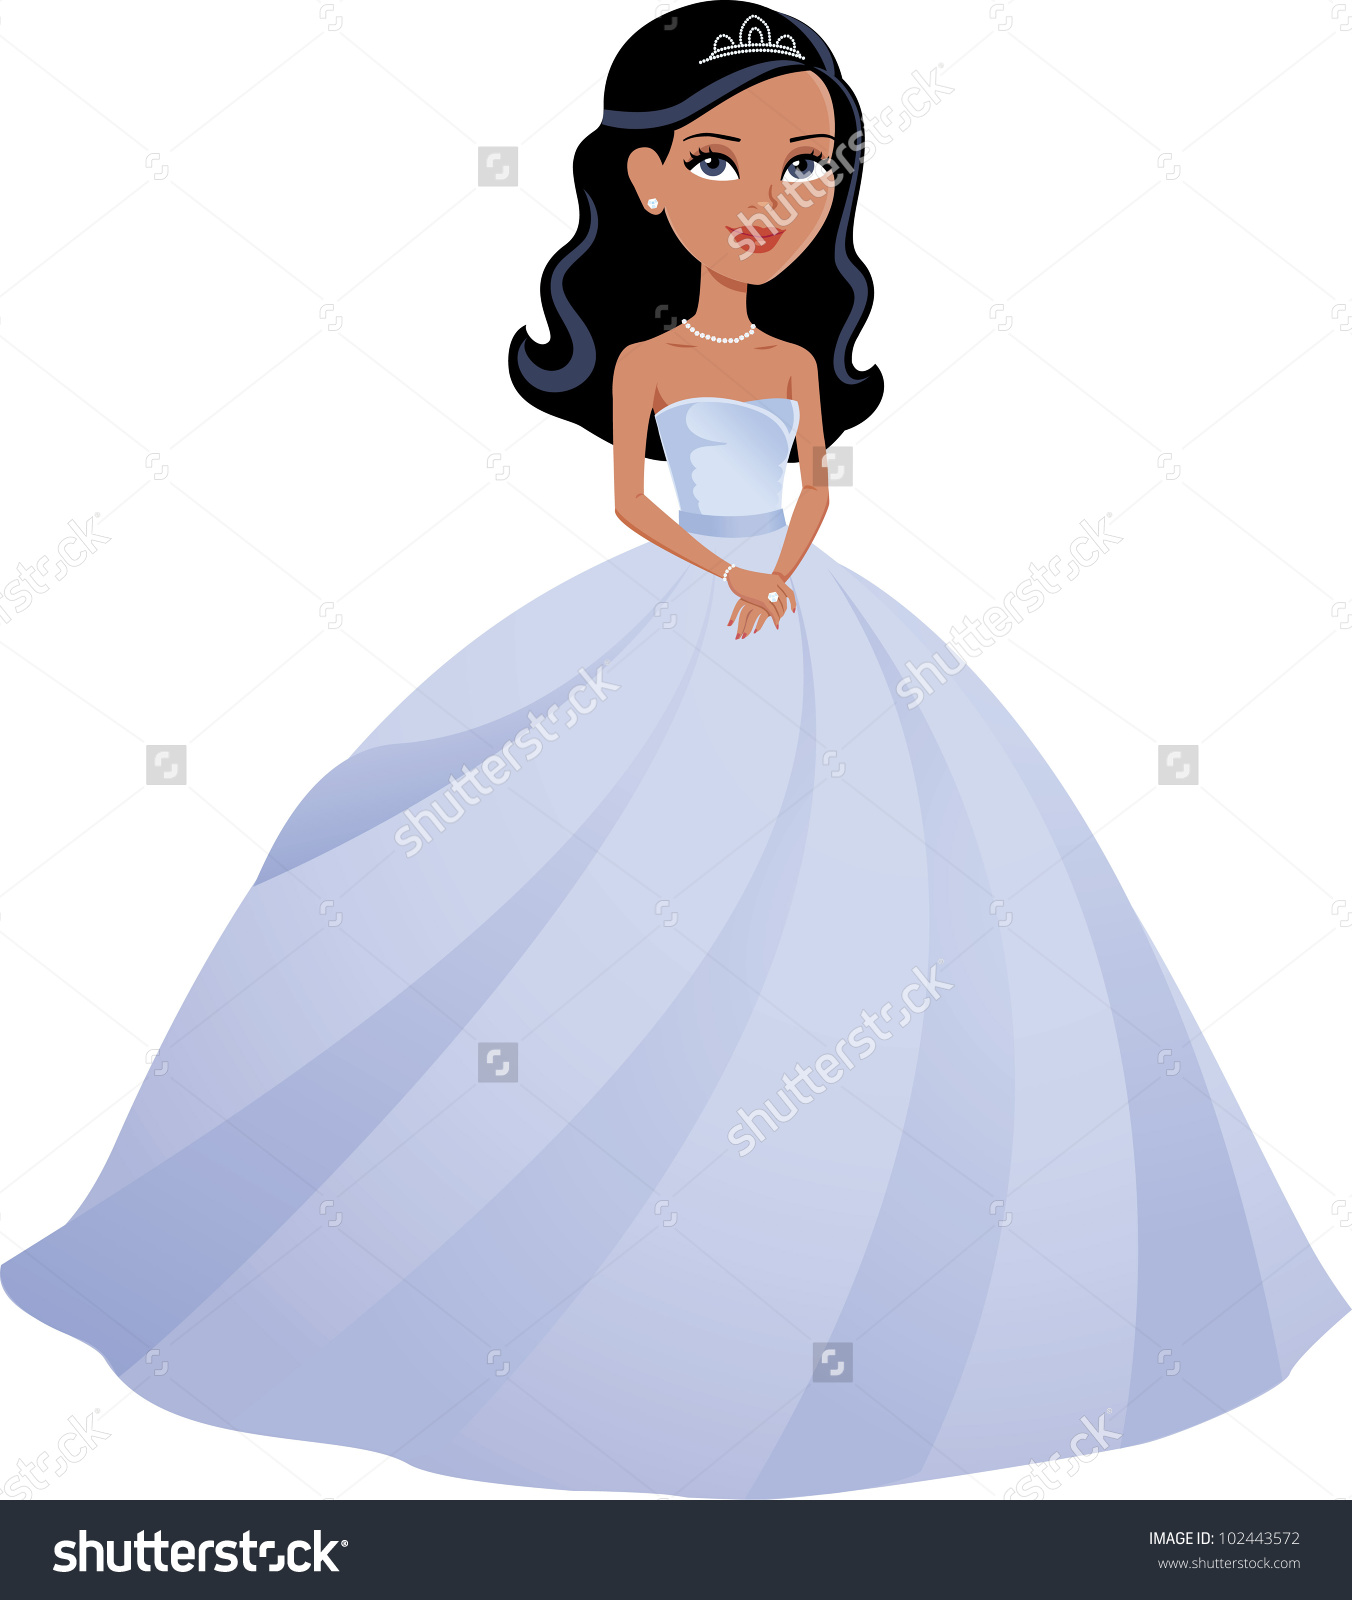 bride clipart ball gown